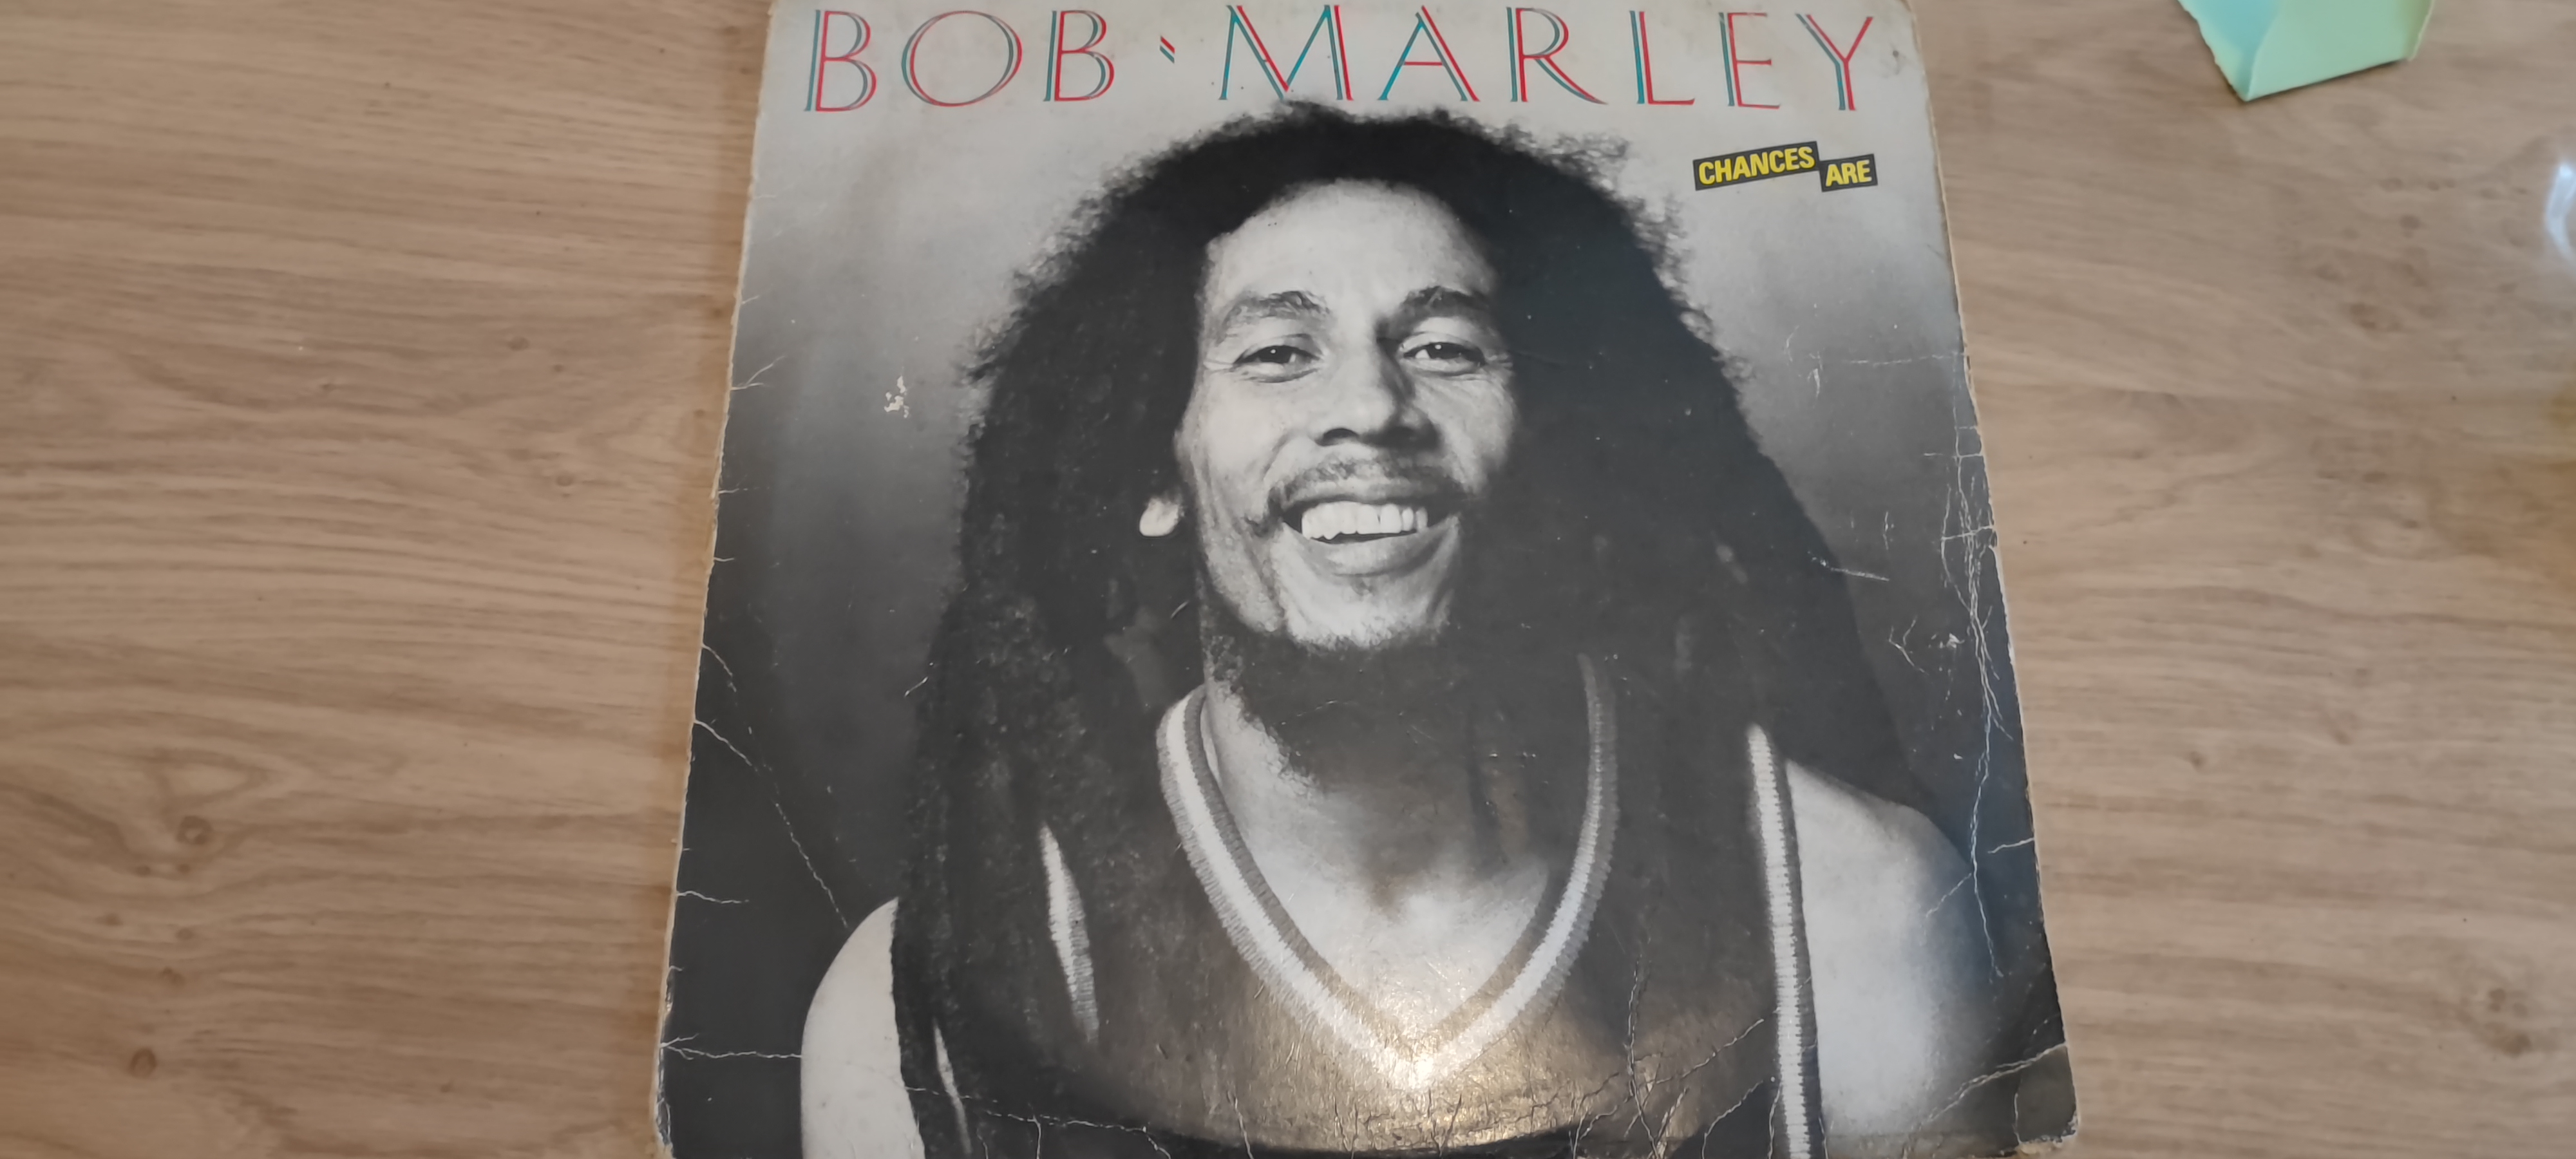 Acheter disque vinyle Bob Marley Chances are a vendre